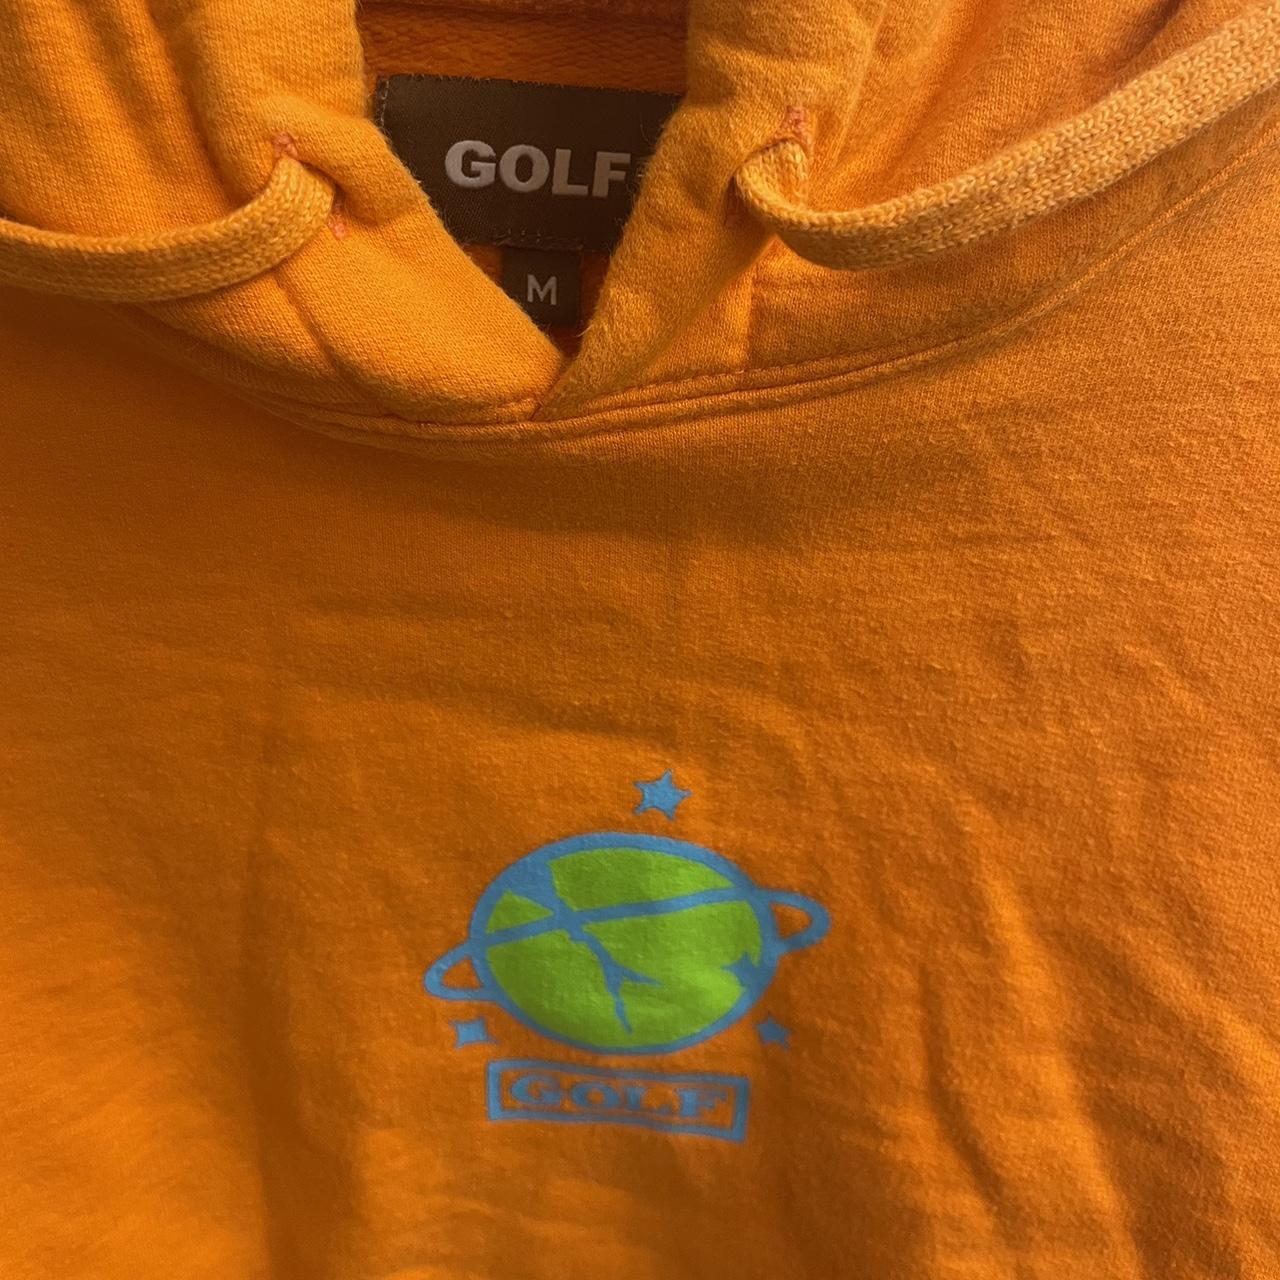 Golf Wang orange hoodie, medium and says universal